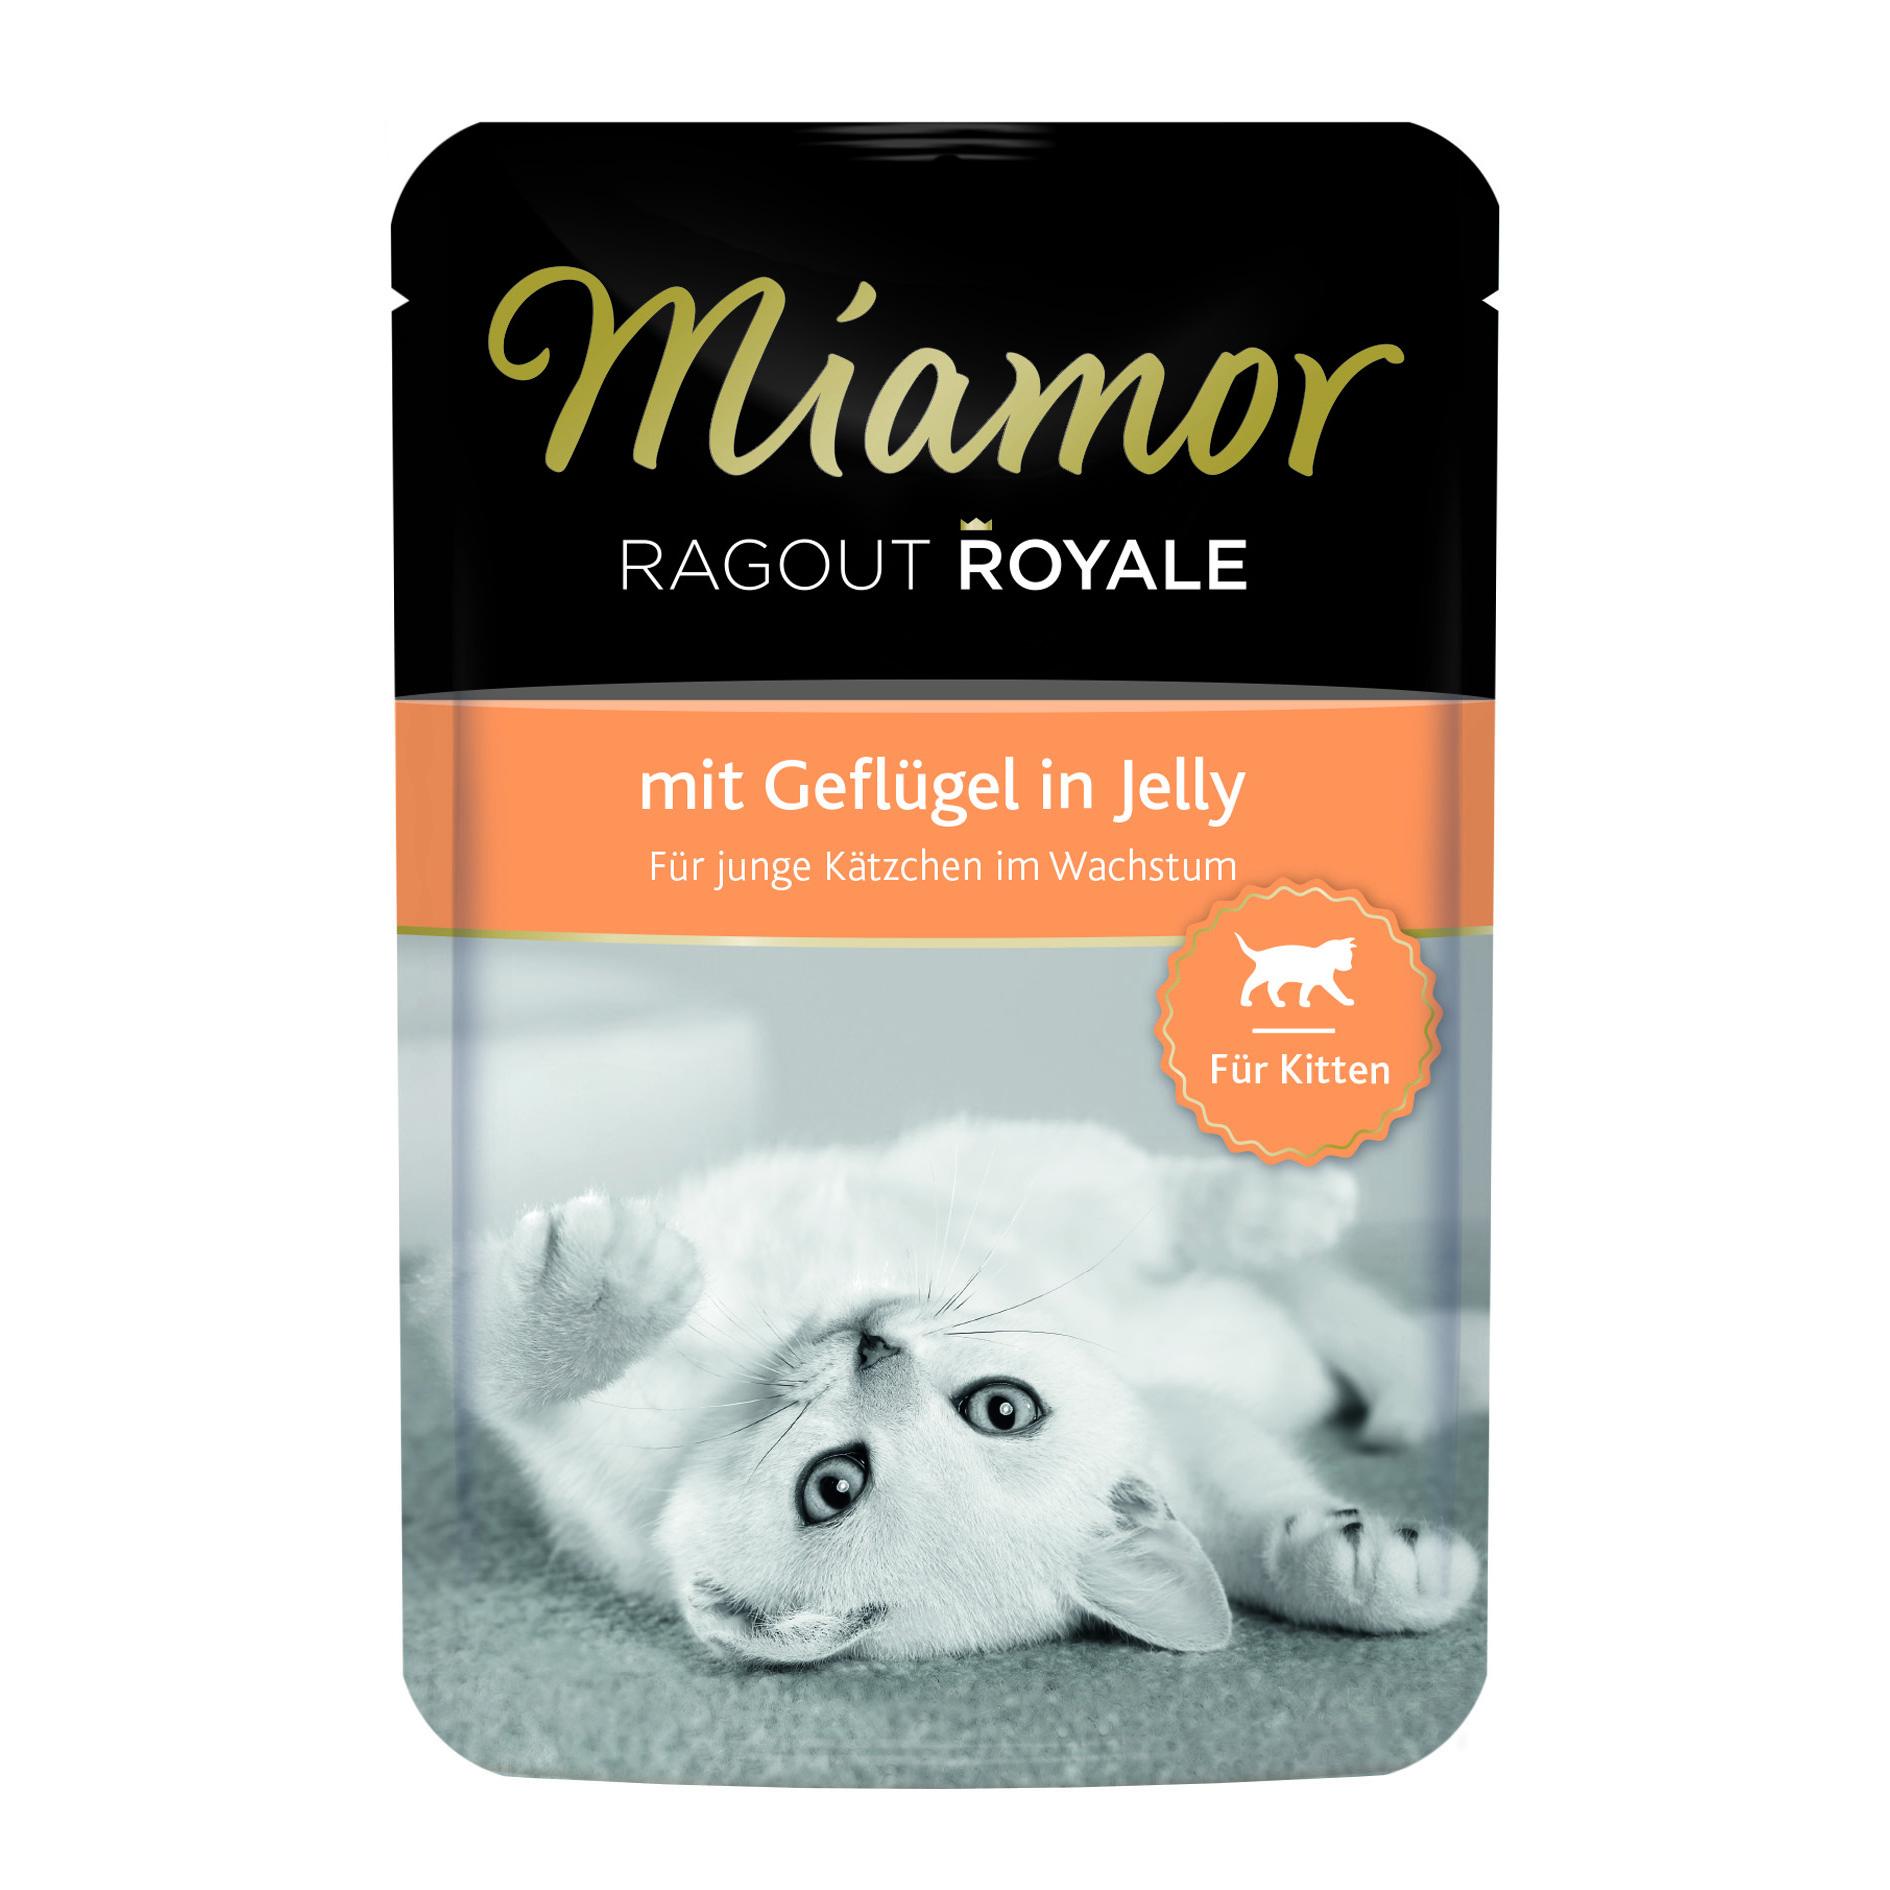 Ragout Royale Kitten 22x100g Geflügel